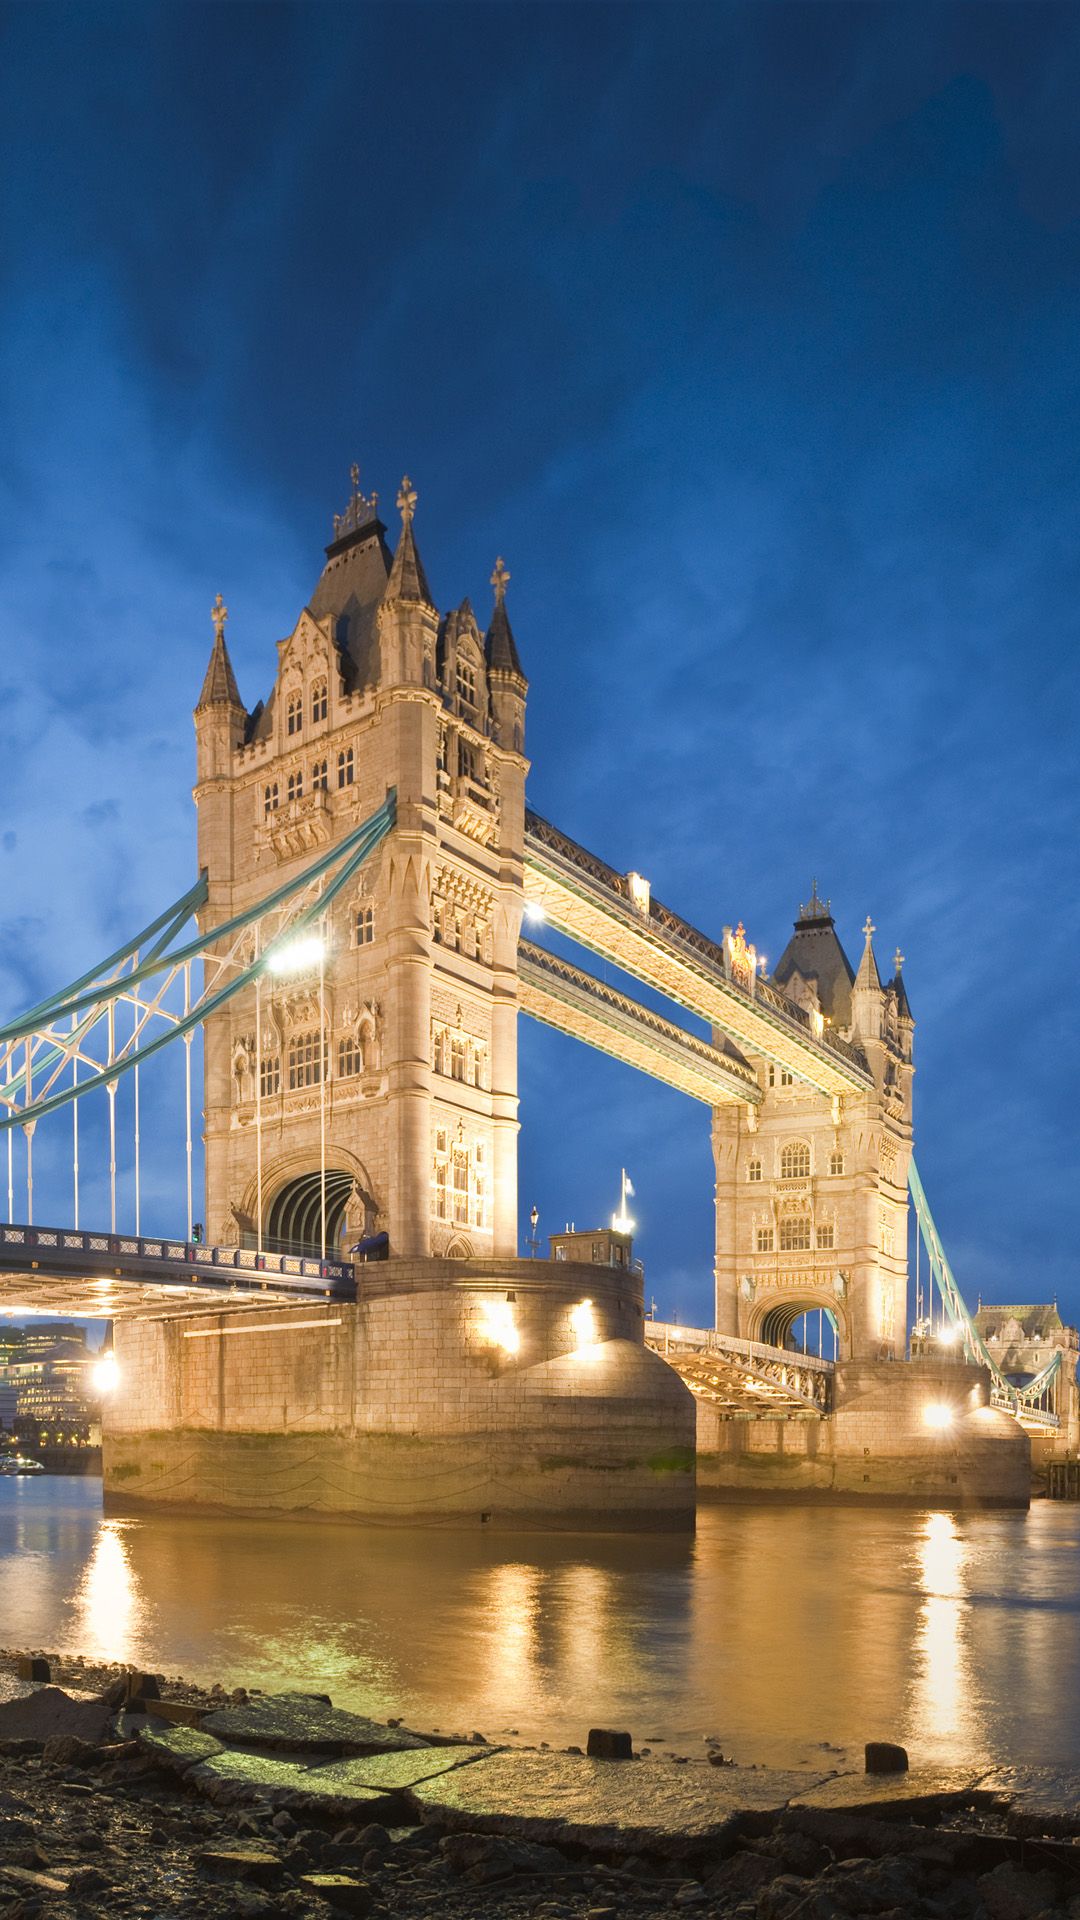 England London Bridge iphone 6 plus Wallpapers iPhone 6 Plus